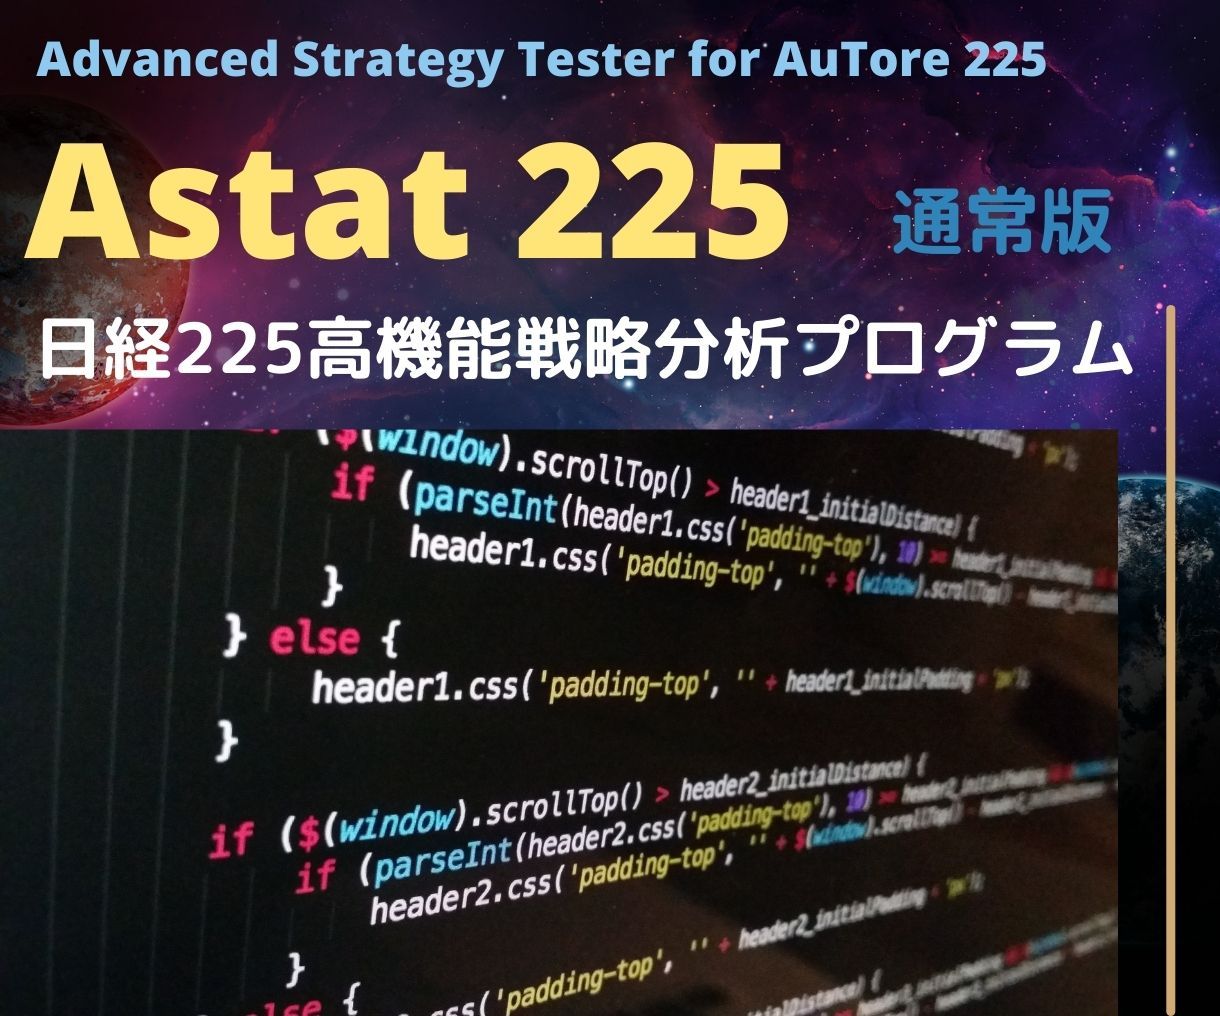 Astat225高機能戦略分析ツール◆通常版 インジケーター・電子書籍